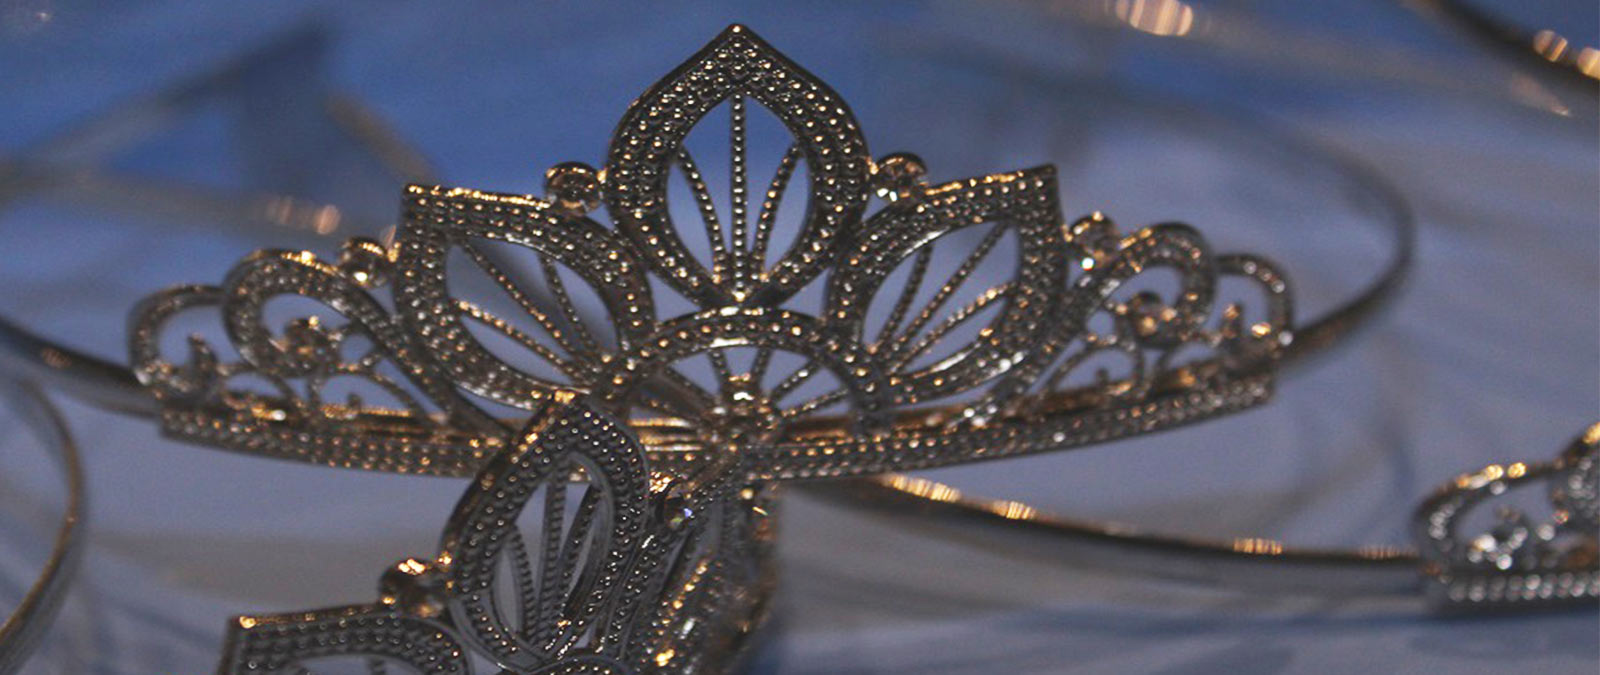 photo of a tiara